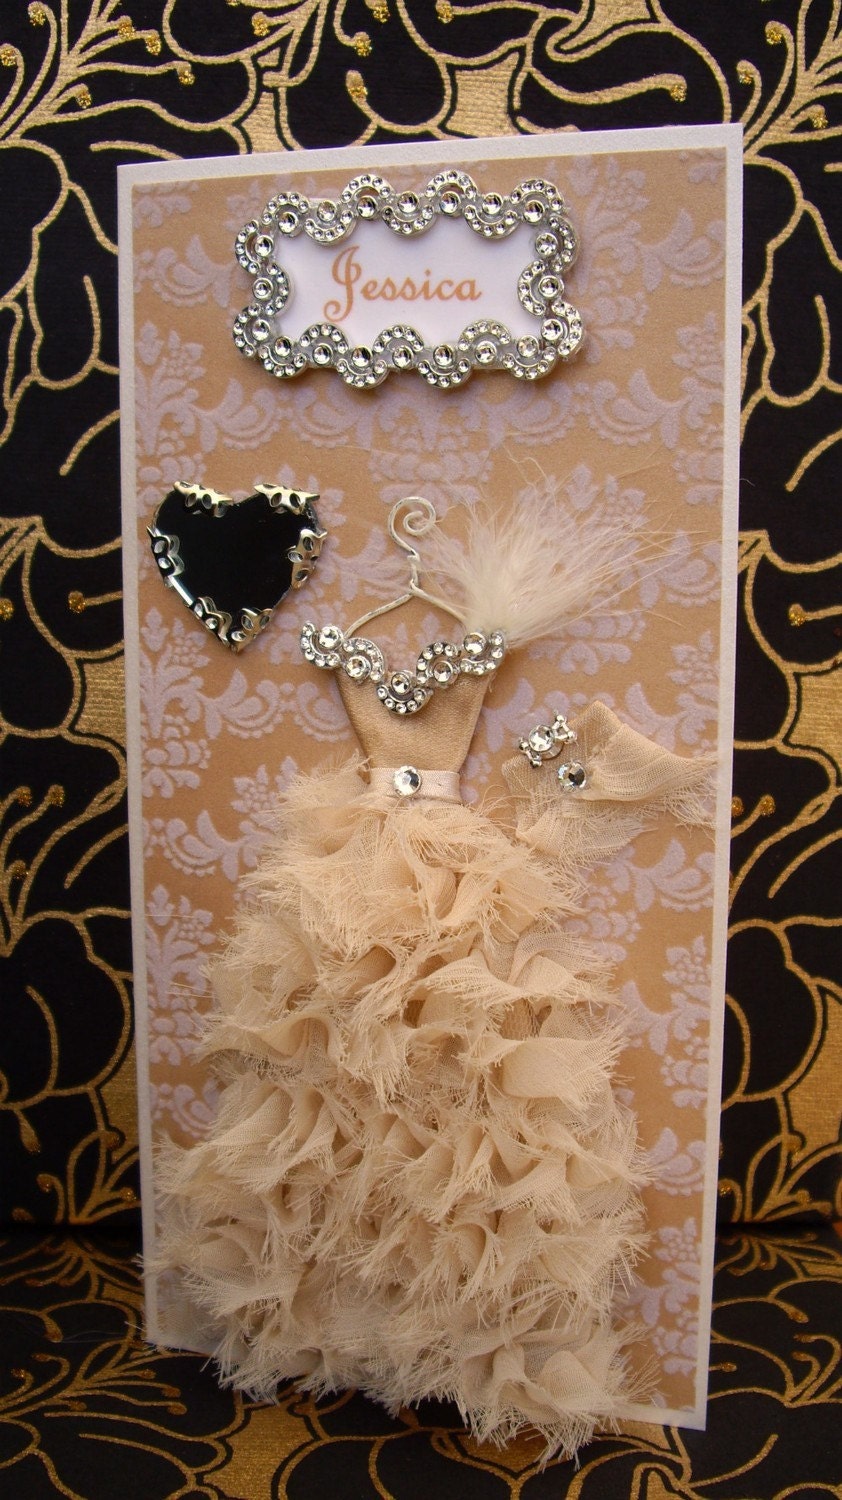 Jessica Personalised Ruffled Dress Card / Handmade Greeting Card